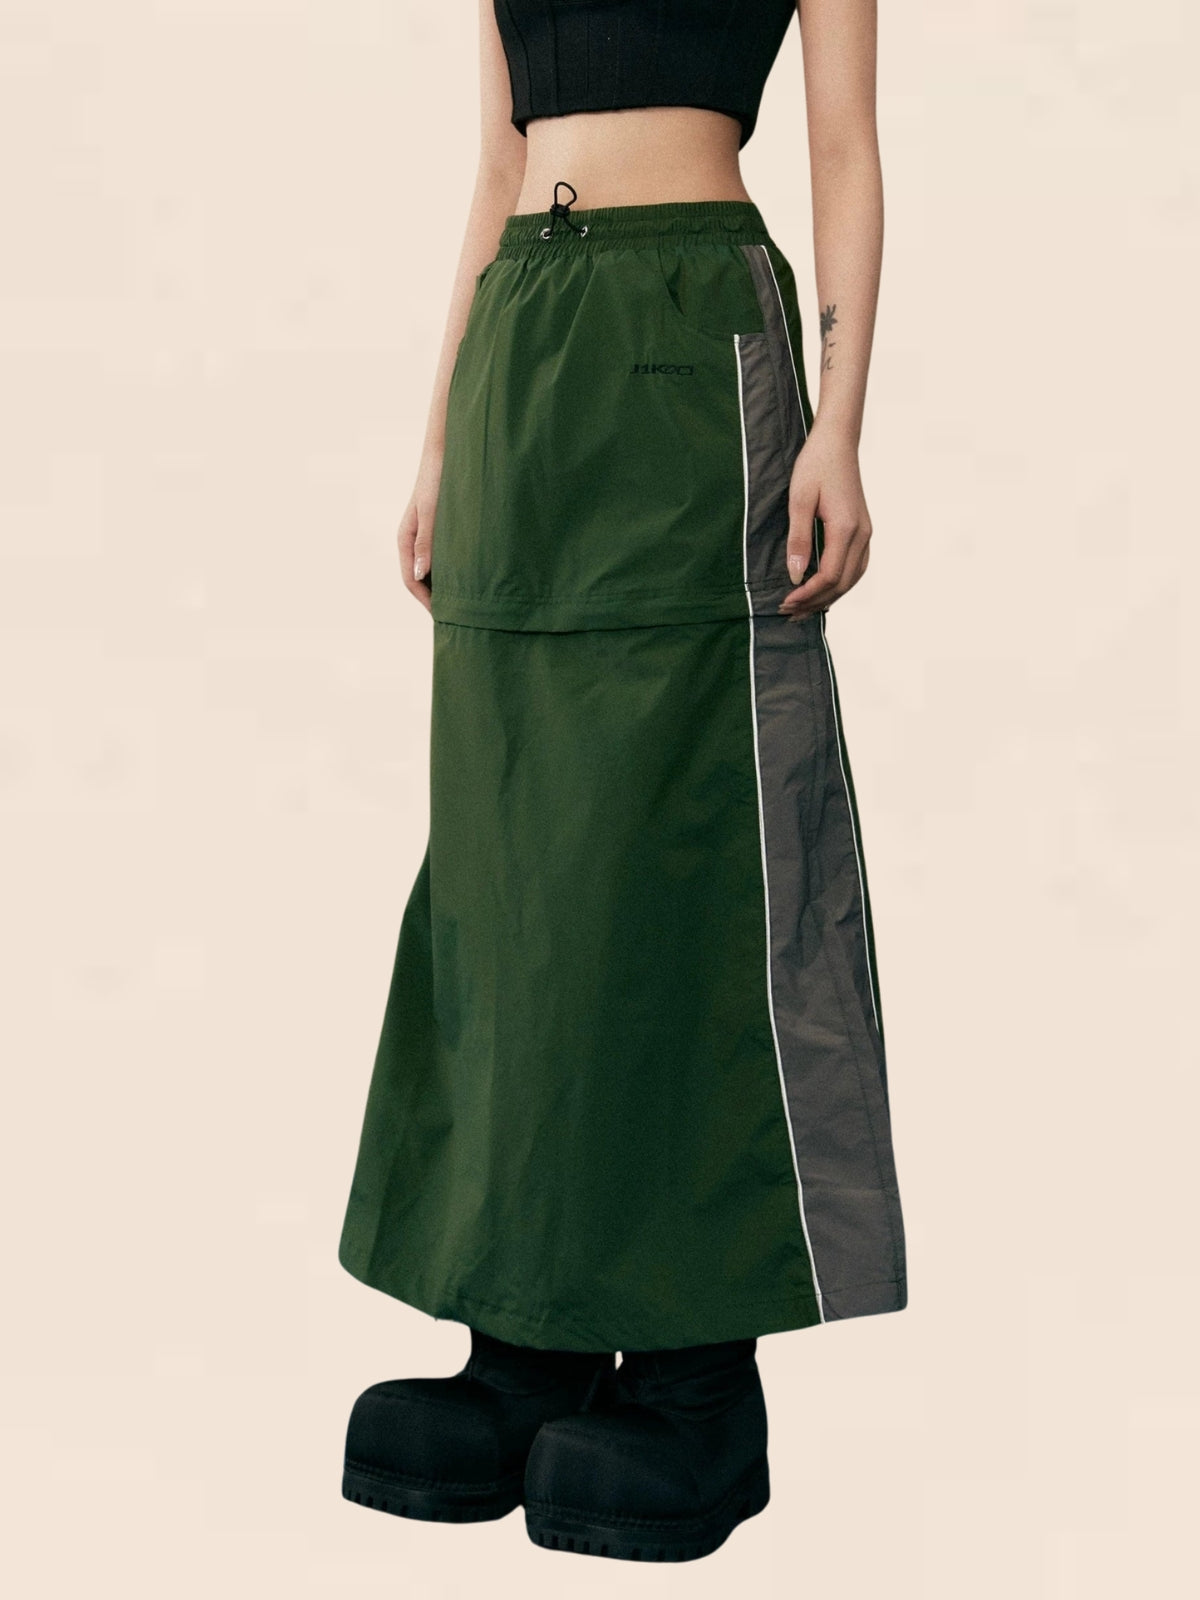 American Retro Green Skirt